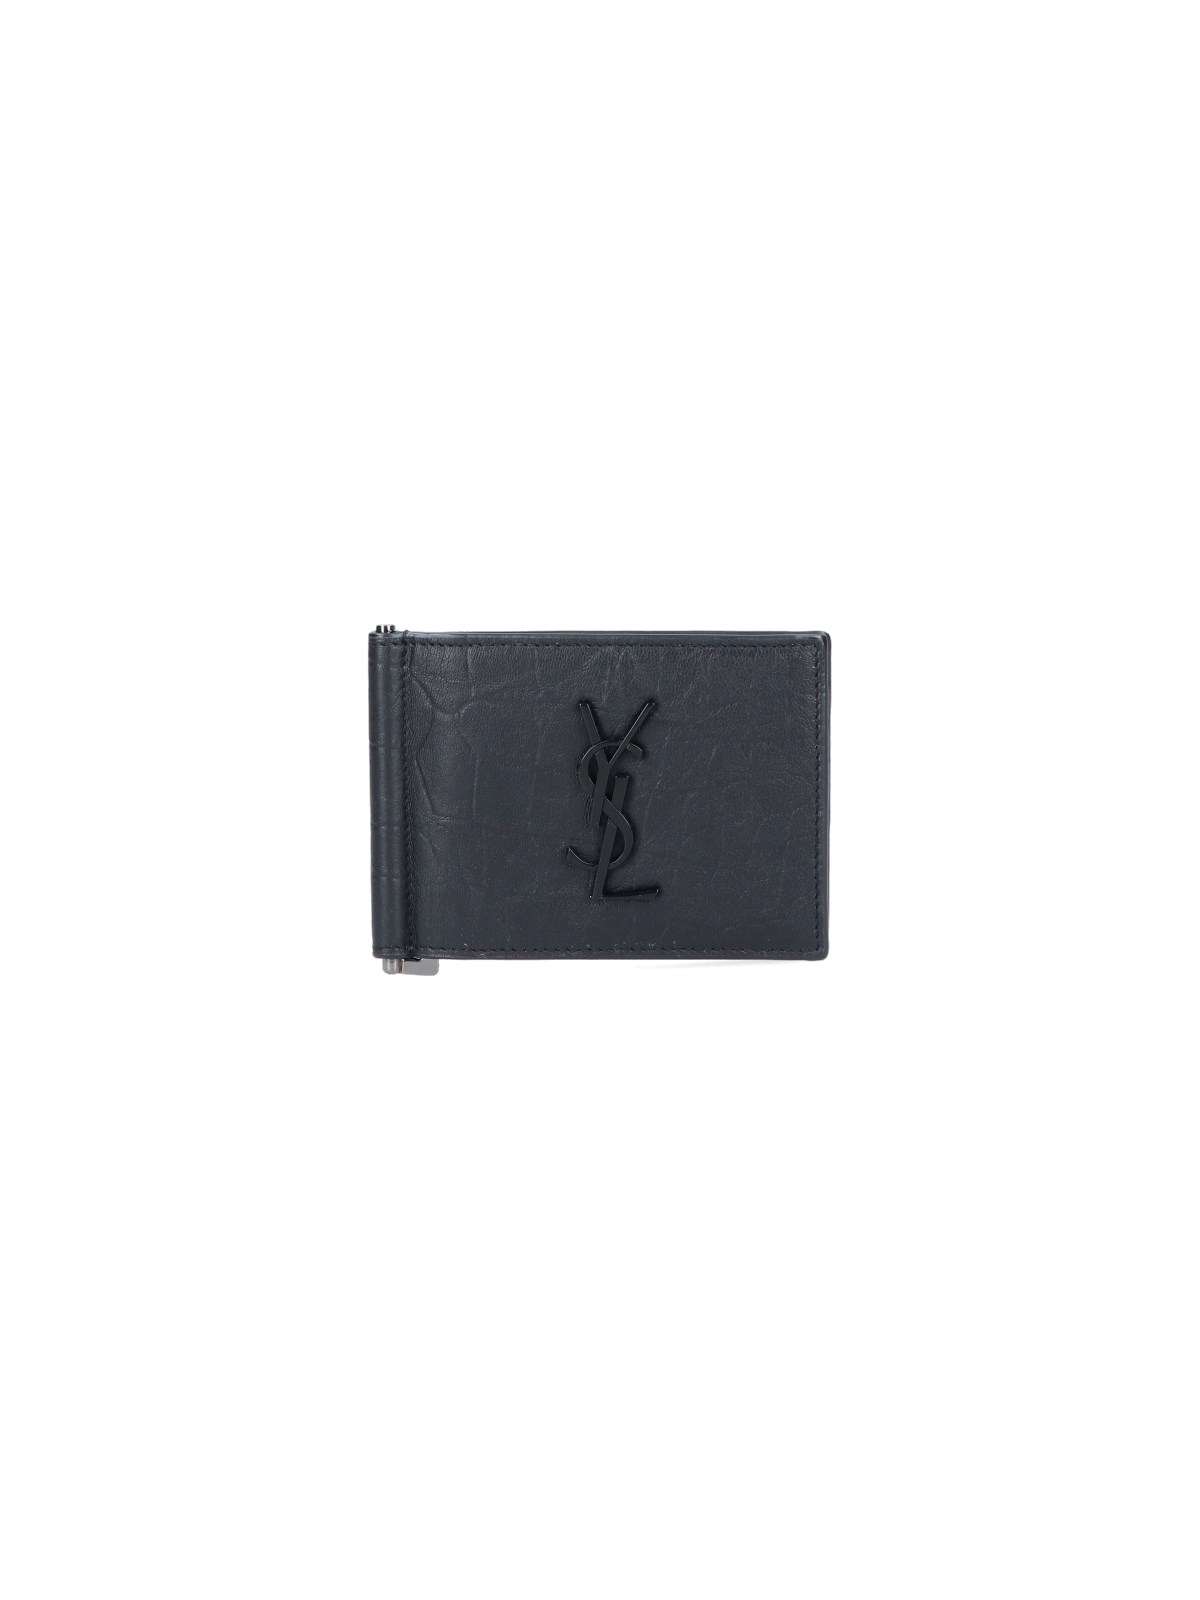 Saint Laurent Men's Money Clip Leather Bifold Wallet - Black - Nero